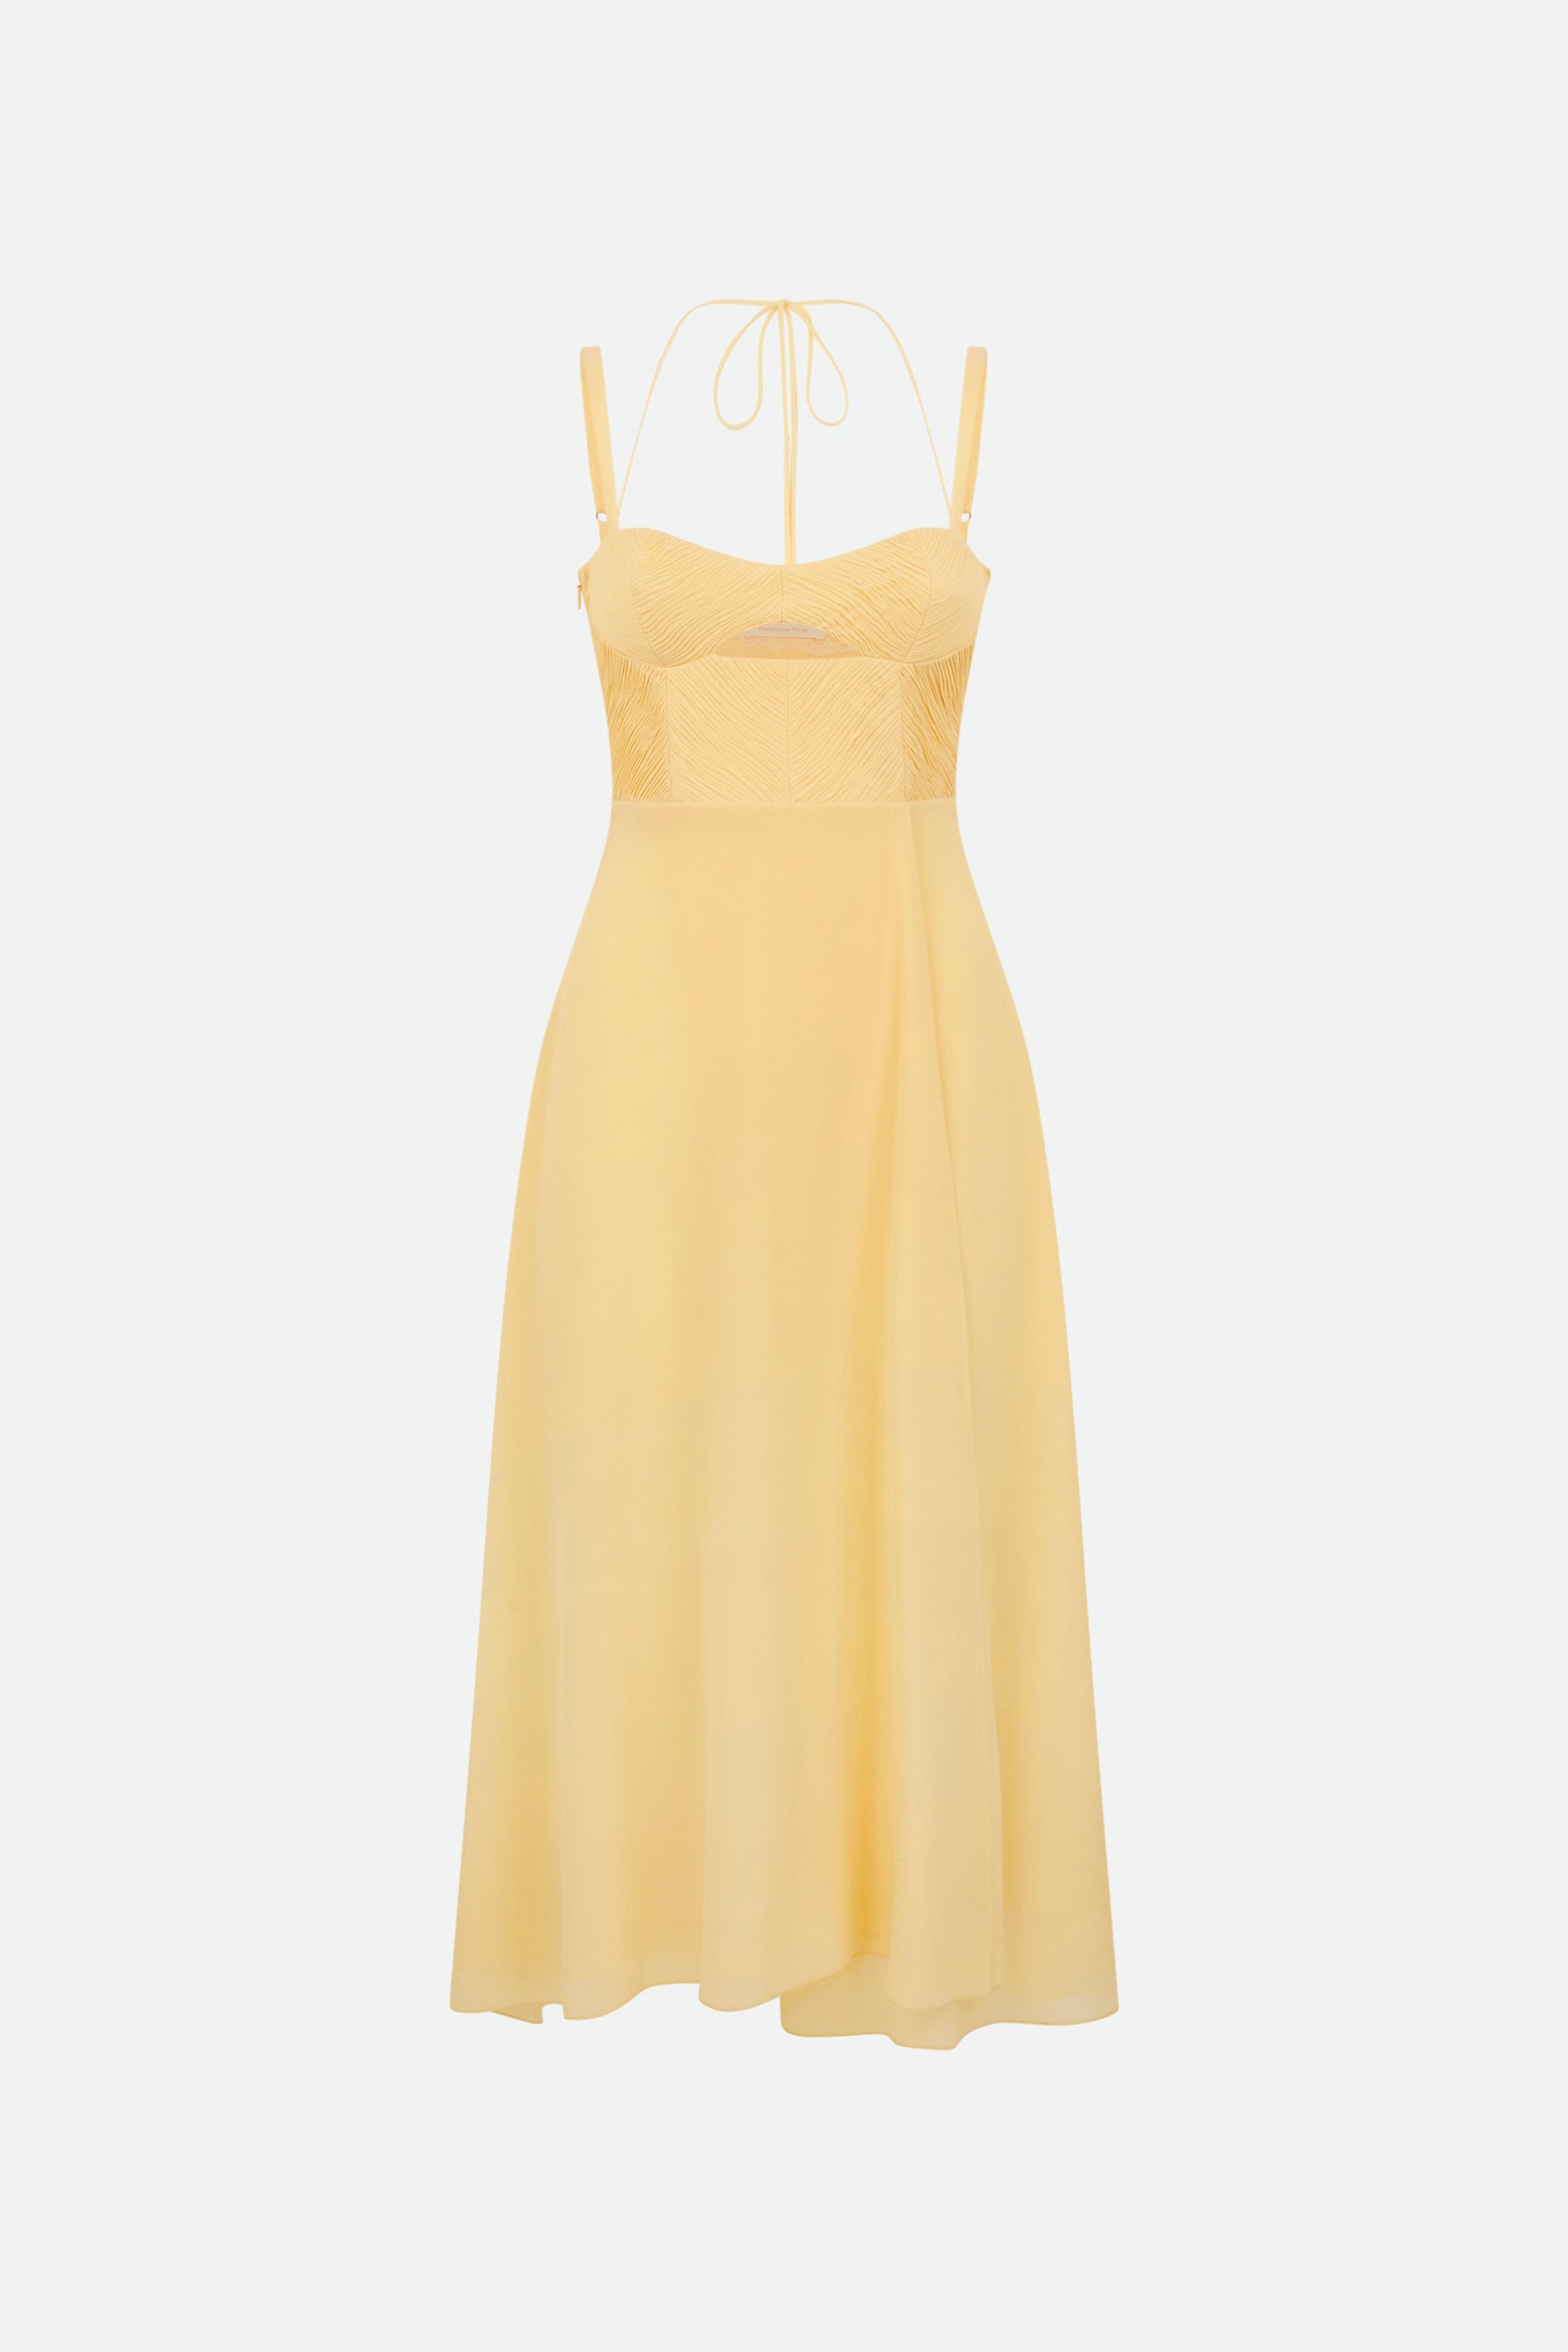 Patrizia Pepe Yellow Midi Dress